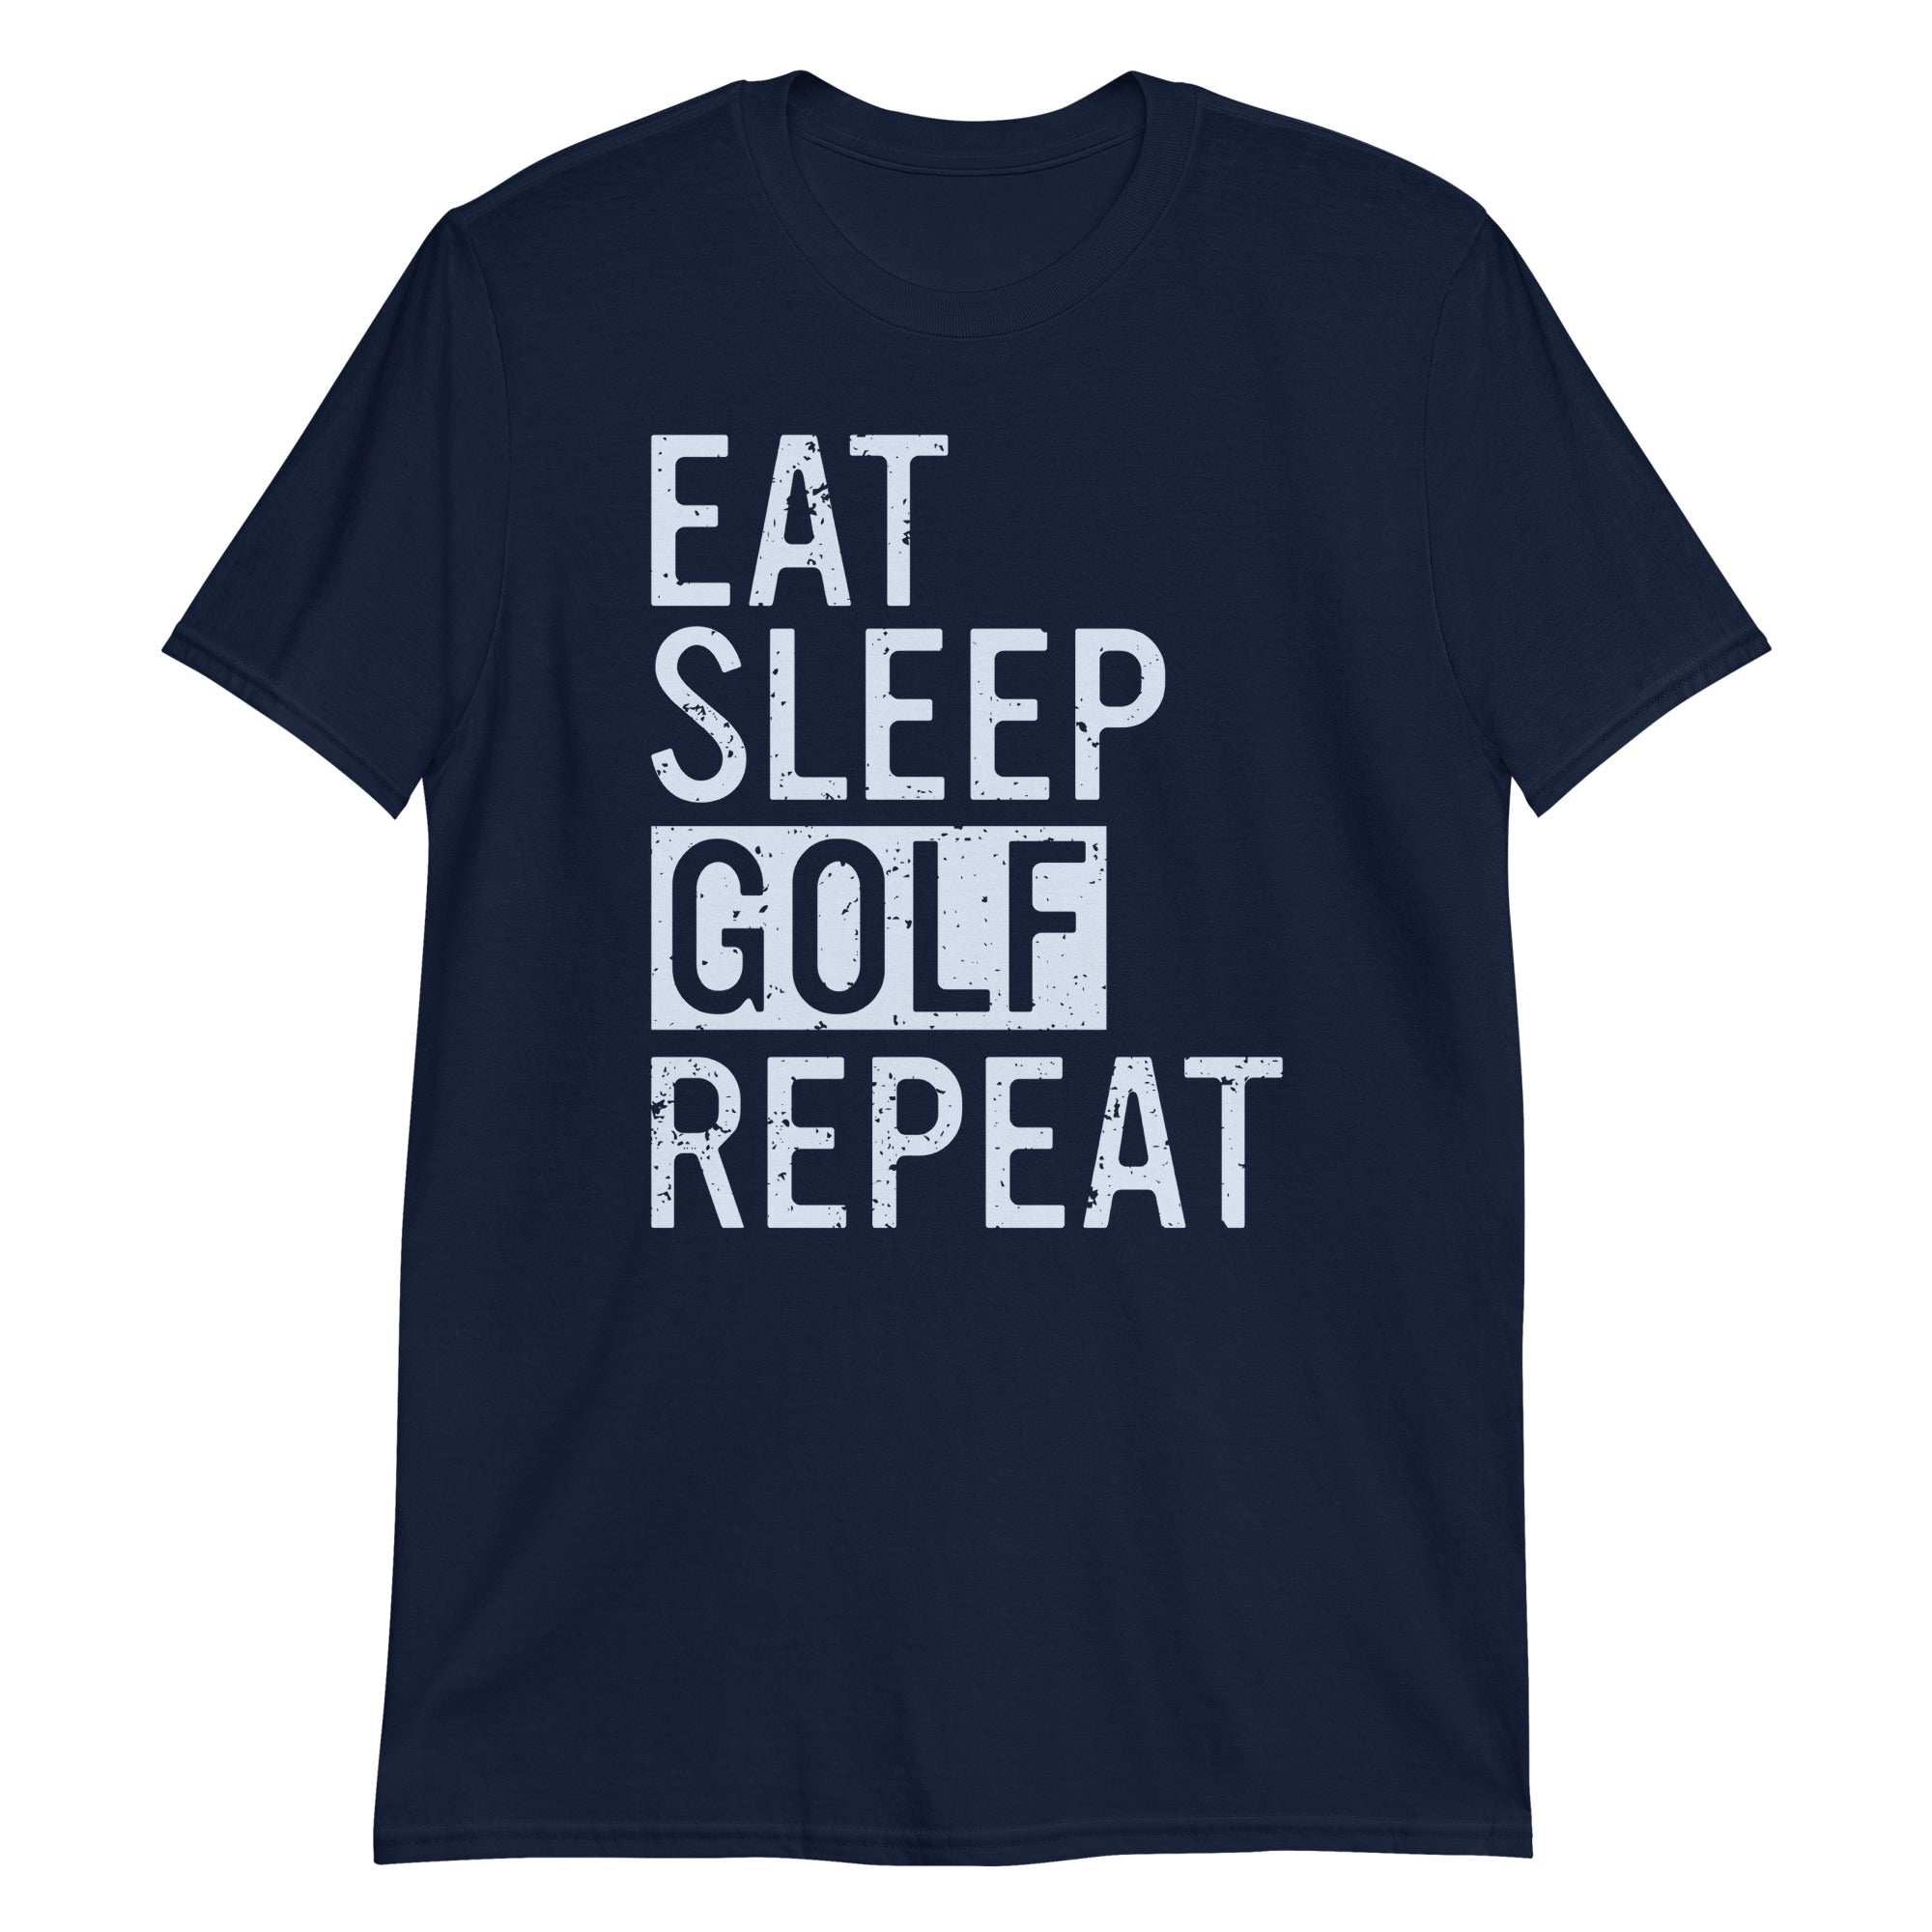 Eat. Sleep. Golf. Repeat.